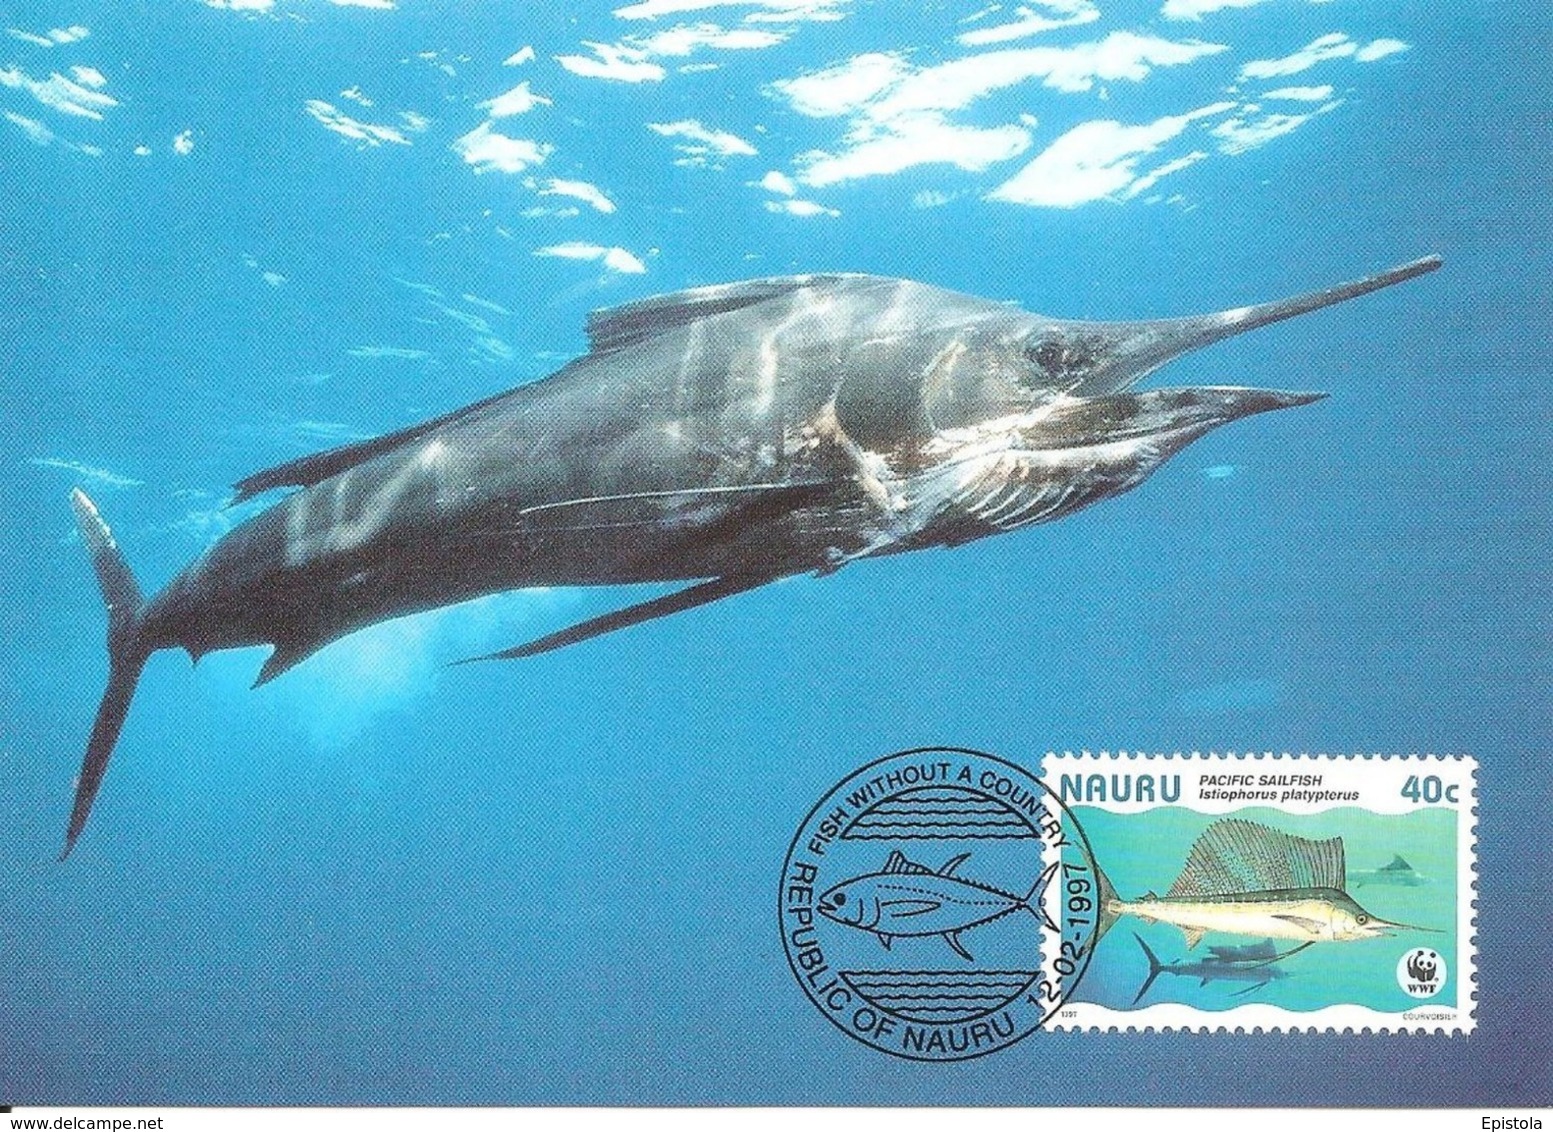 1997 - NAURU - Poisson Voilier - Pacific Sailfish WWF - Nauru